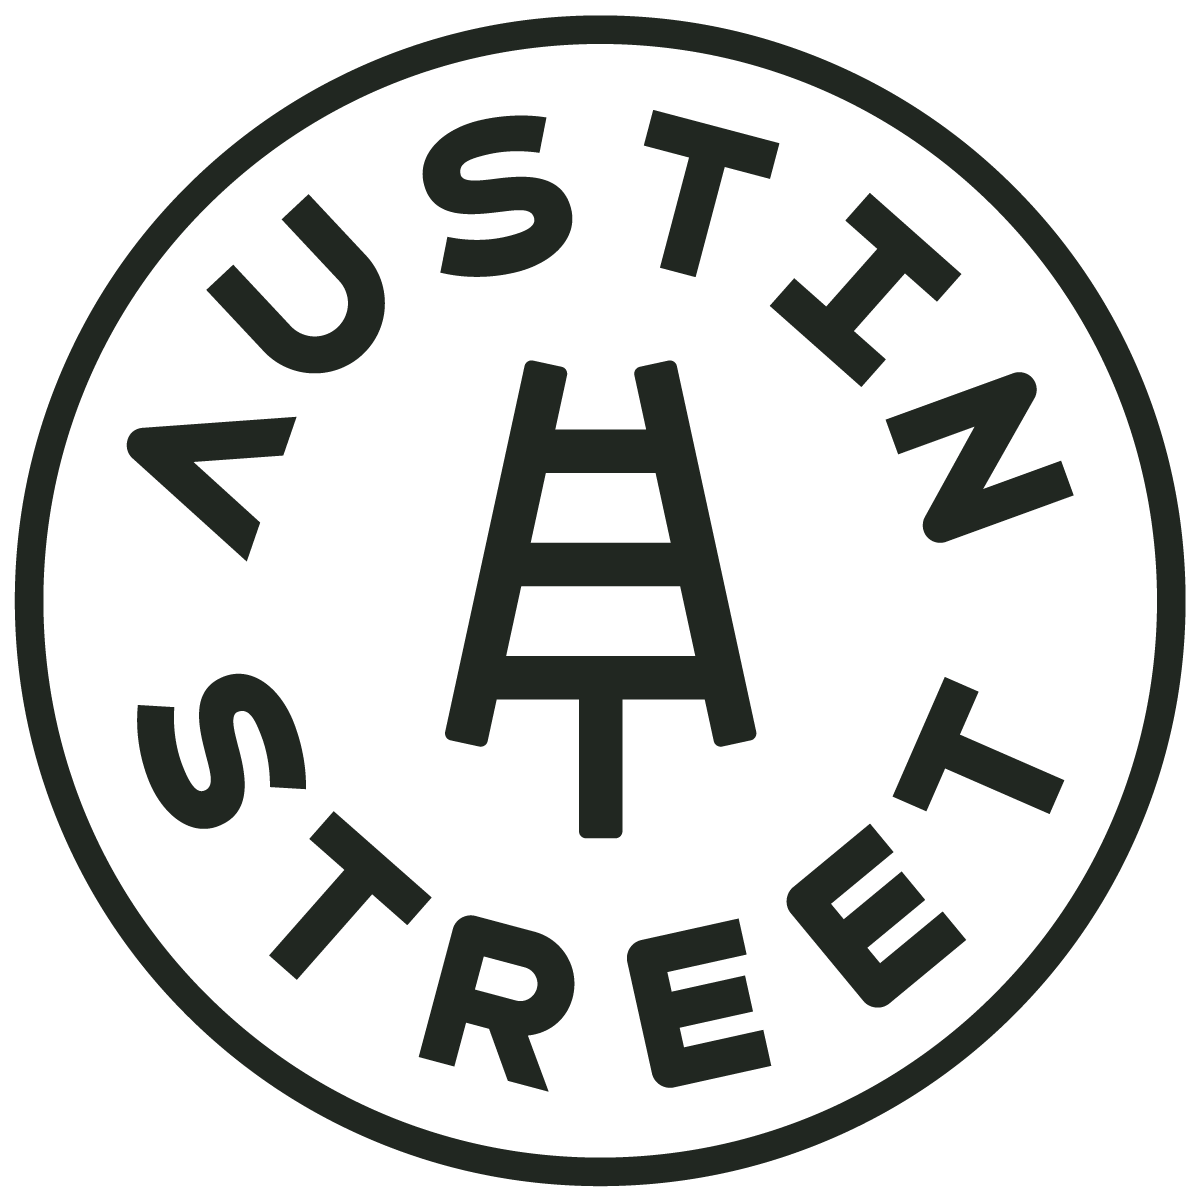 Austin Street Brewery